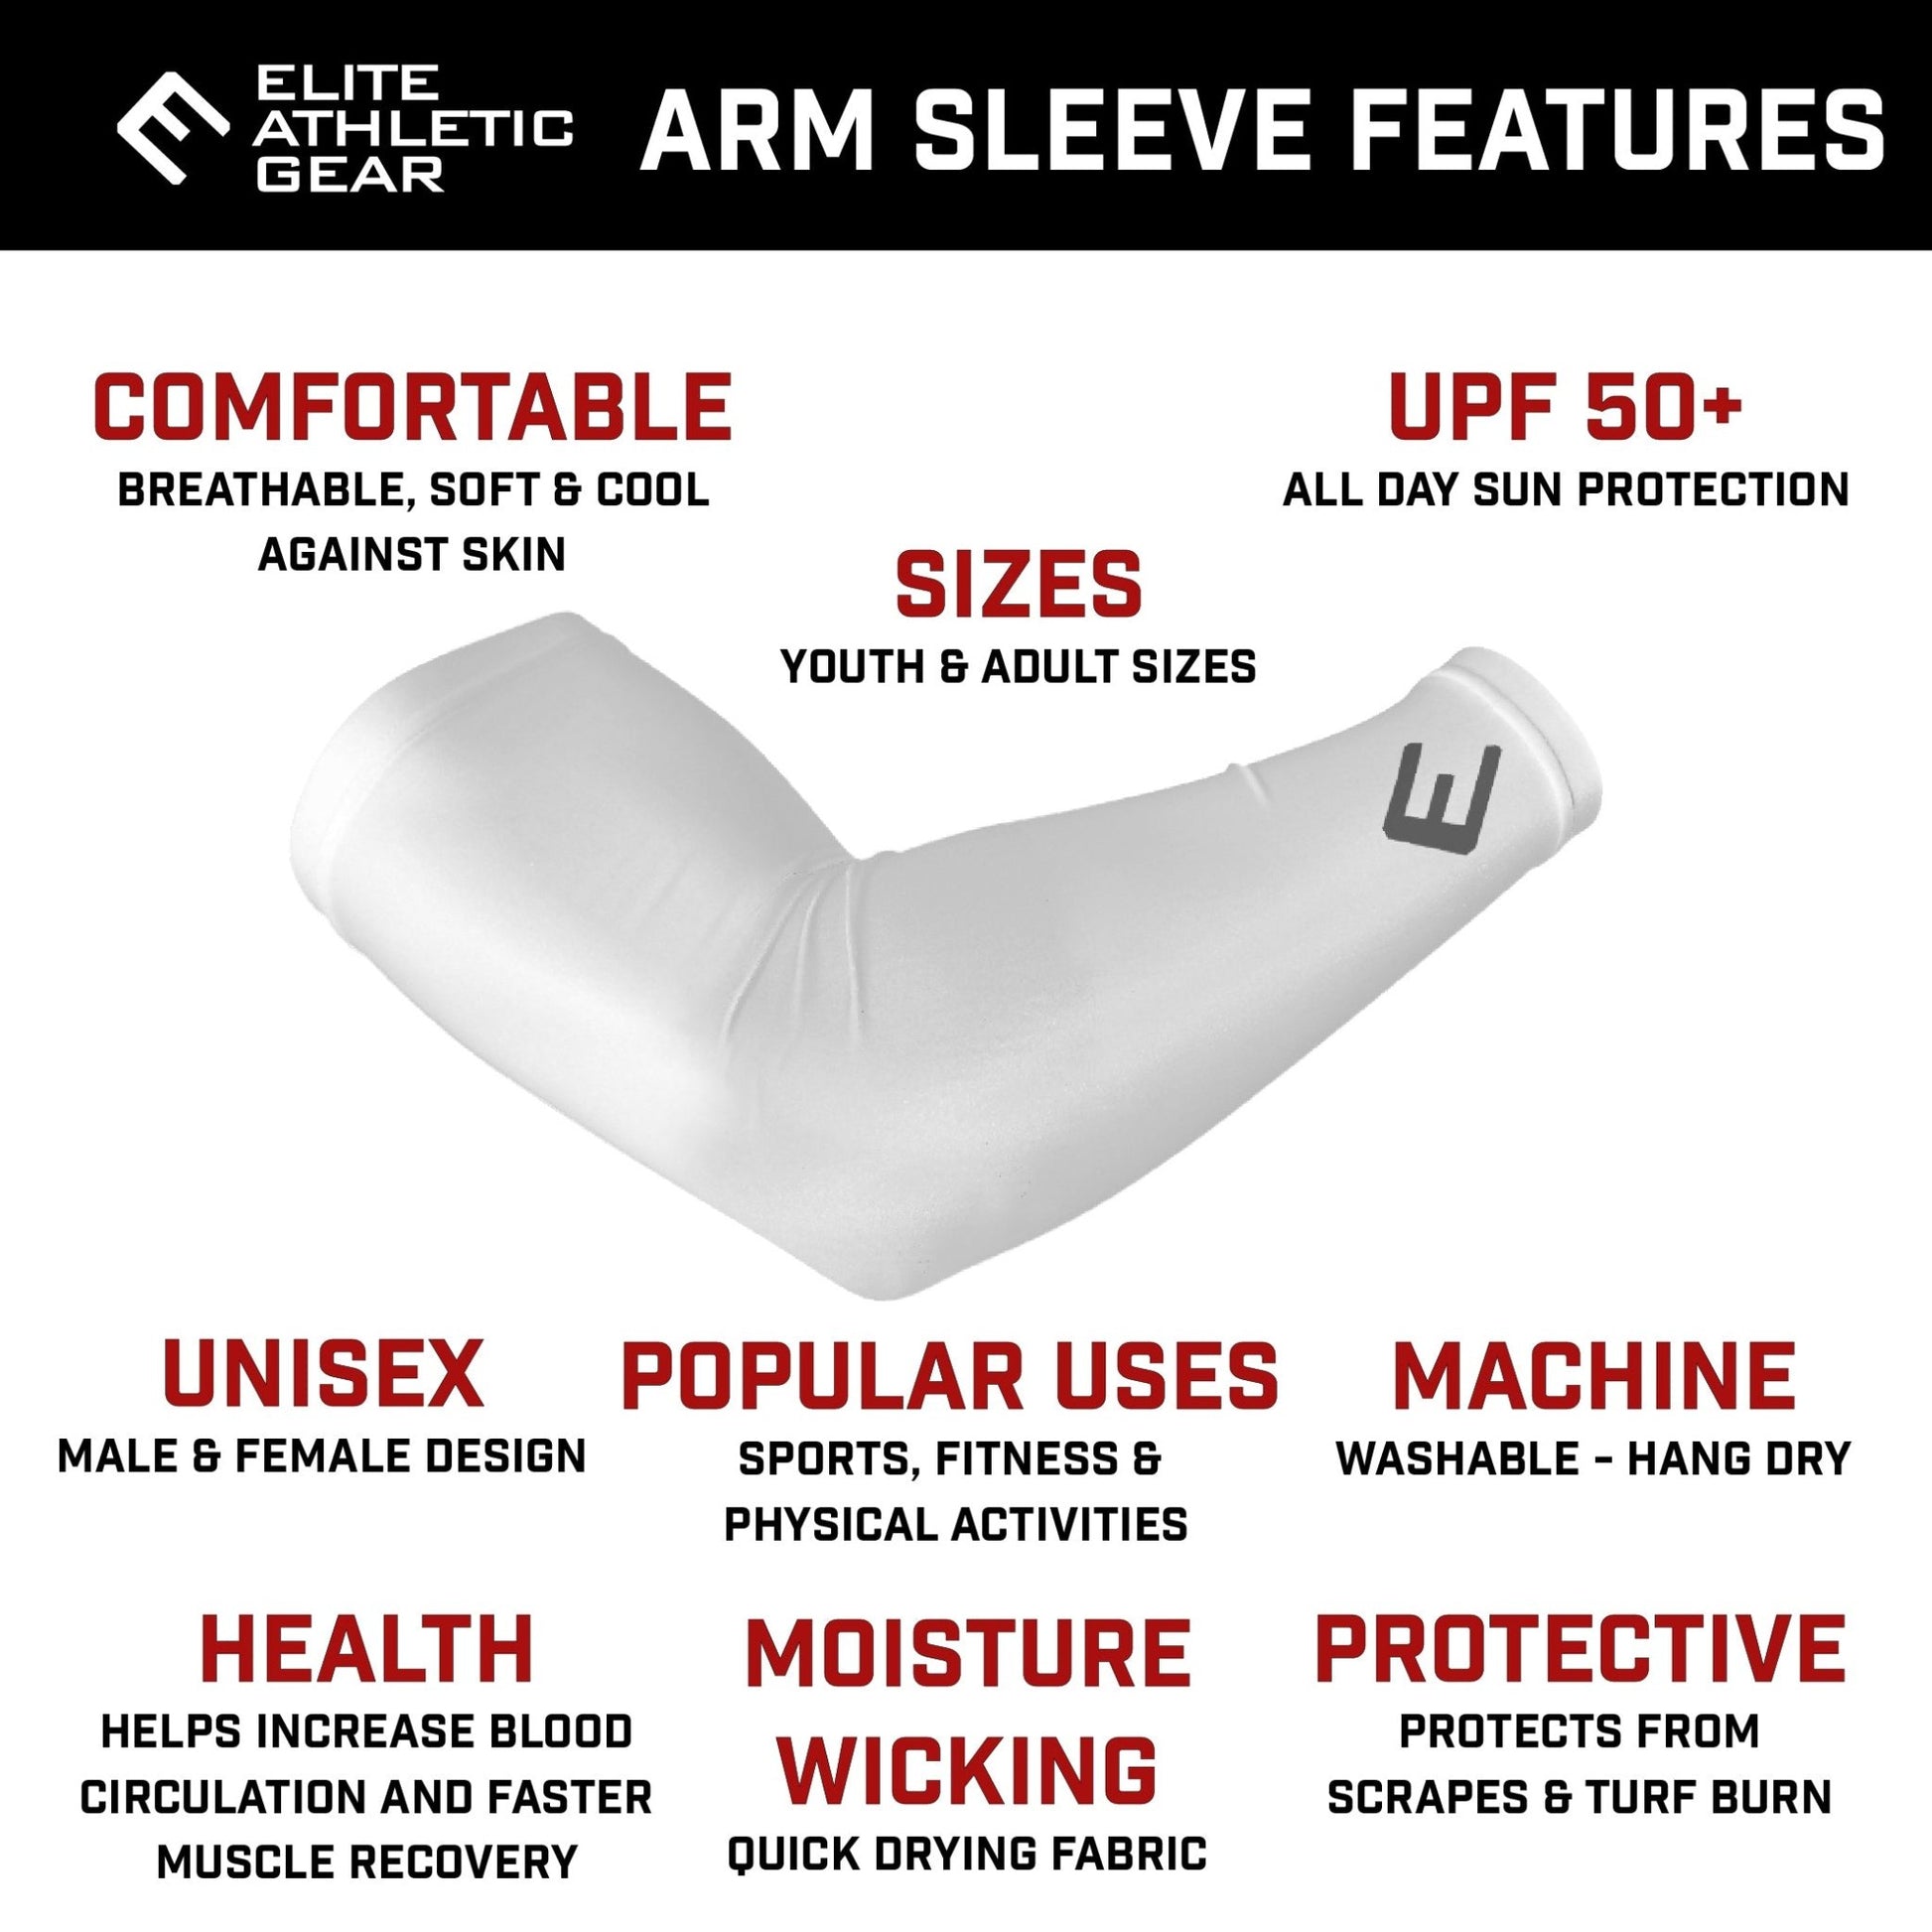 Orange Arm Sleeve - Maximum Velocity Sports